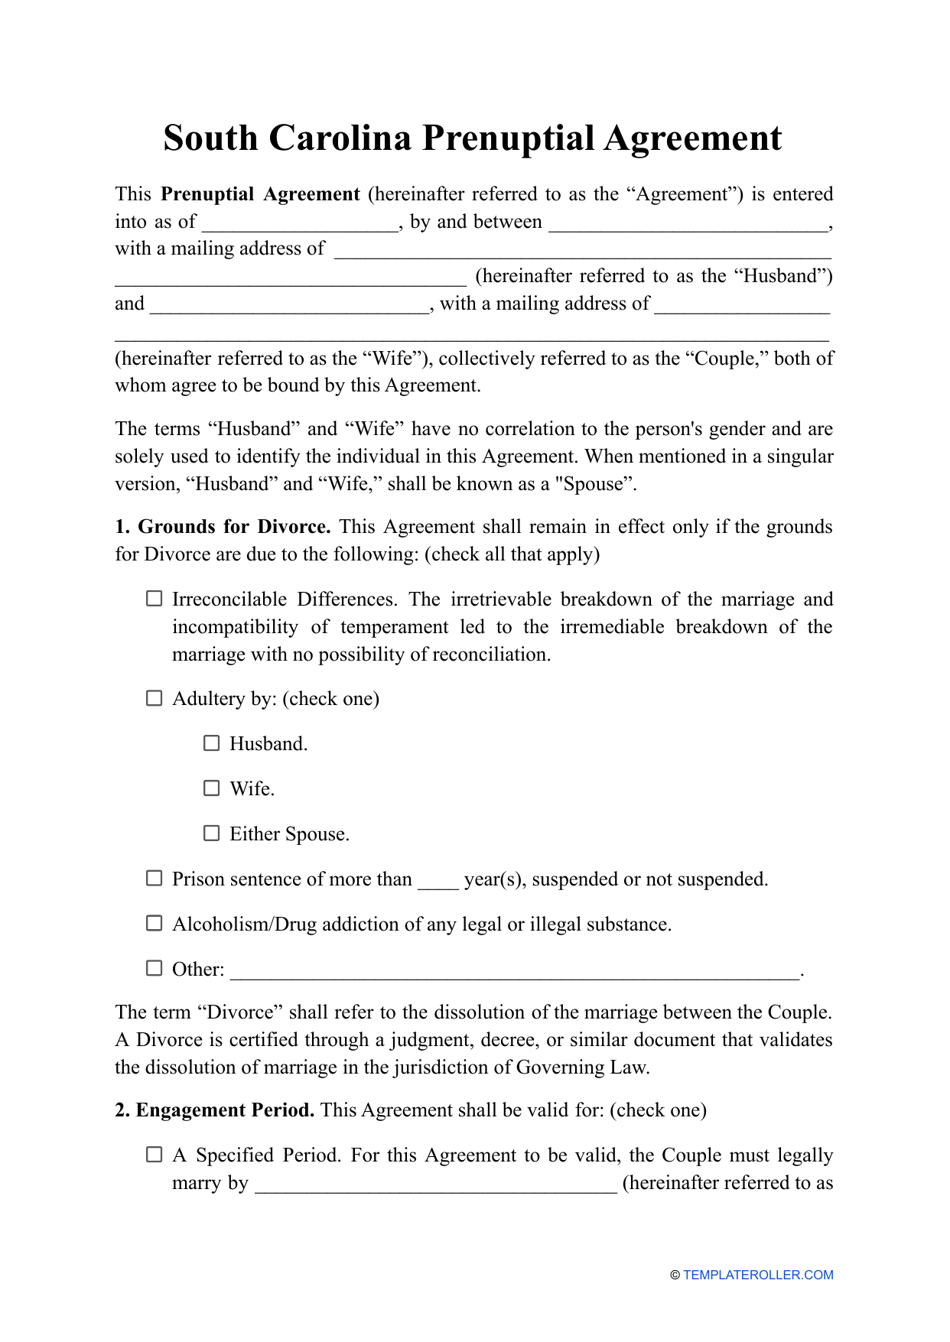 Prenuptial Agreement Template - South Carolina, Page 1